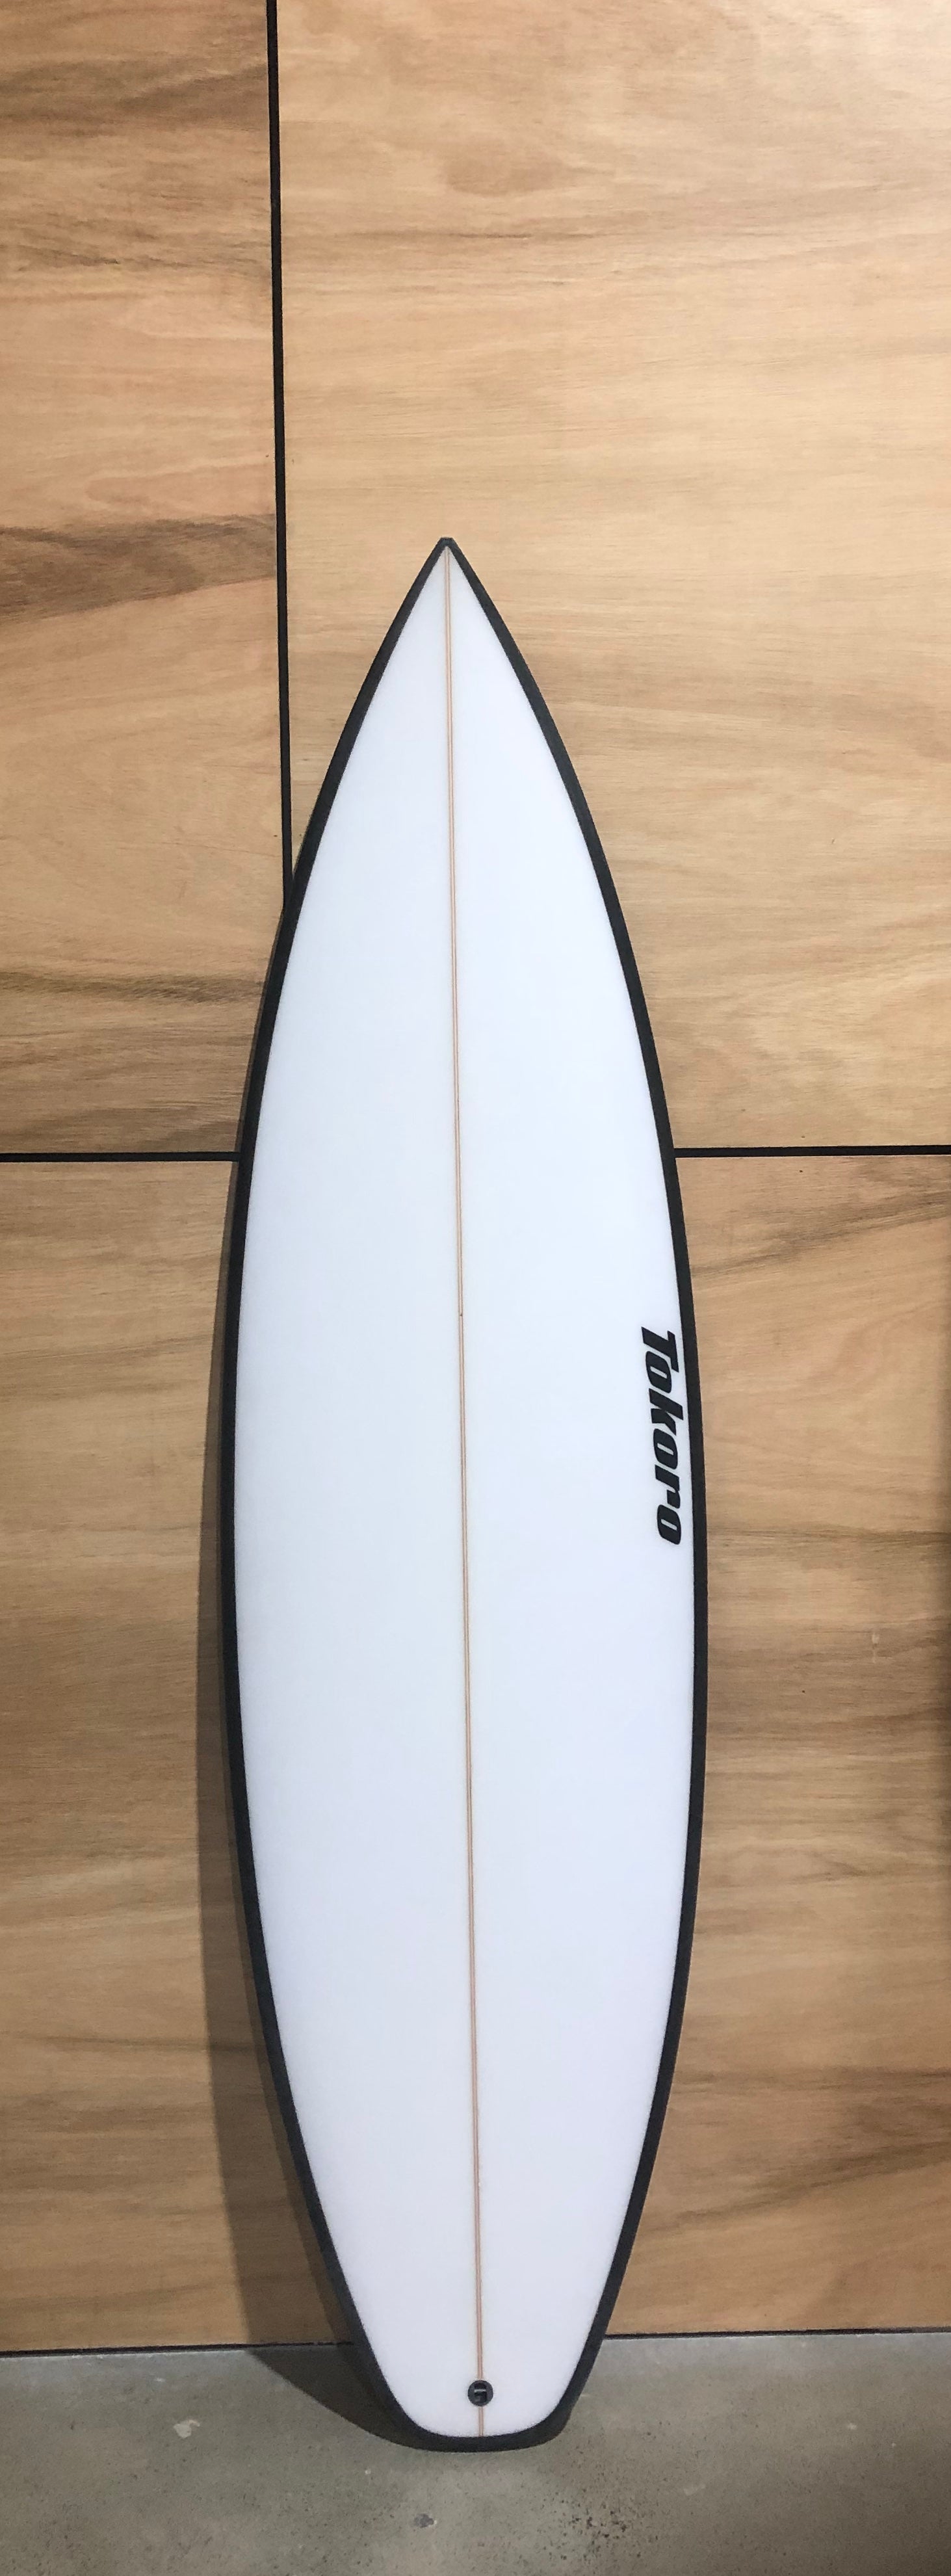 Tokoro surfboard - サーフィン・ボディボード